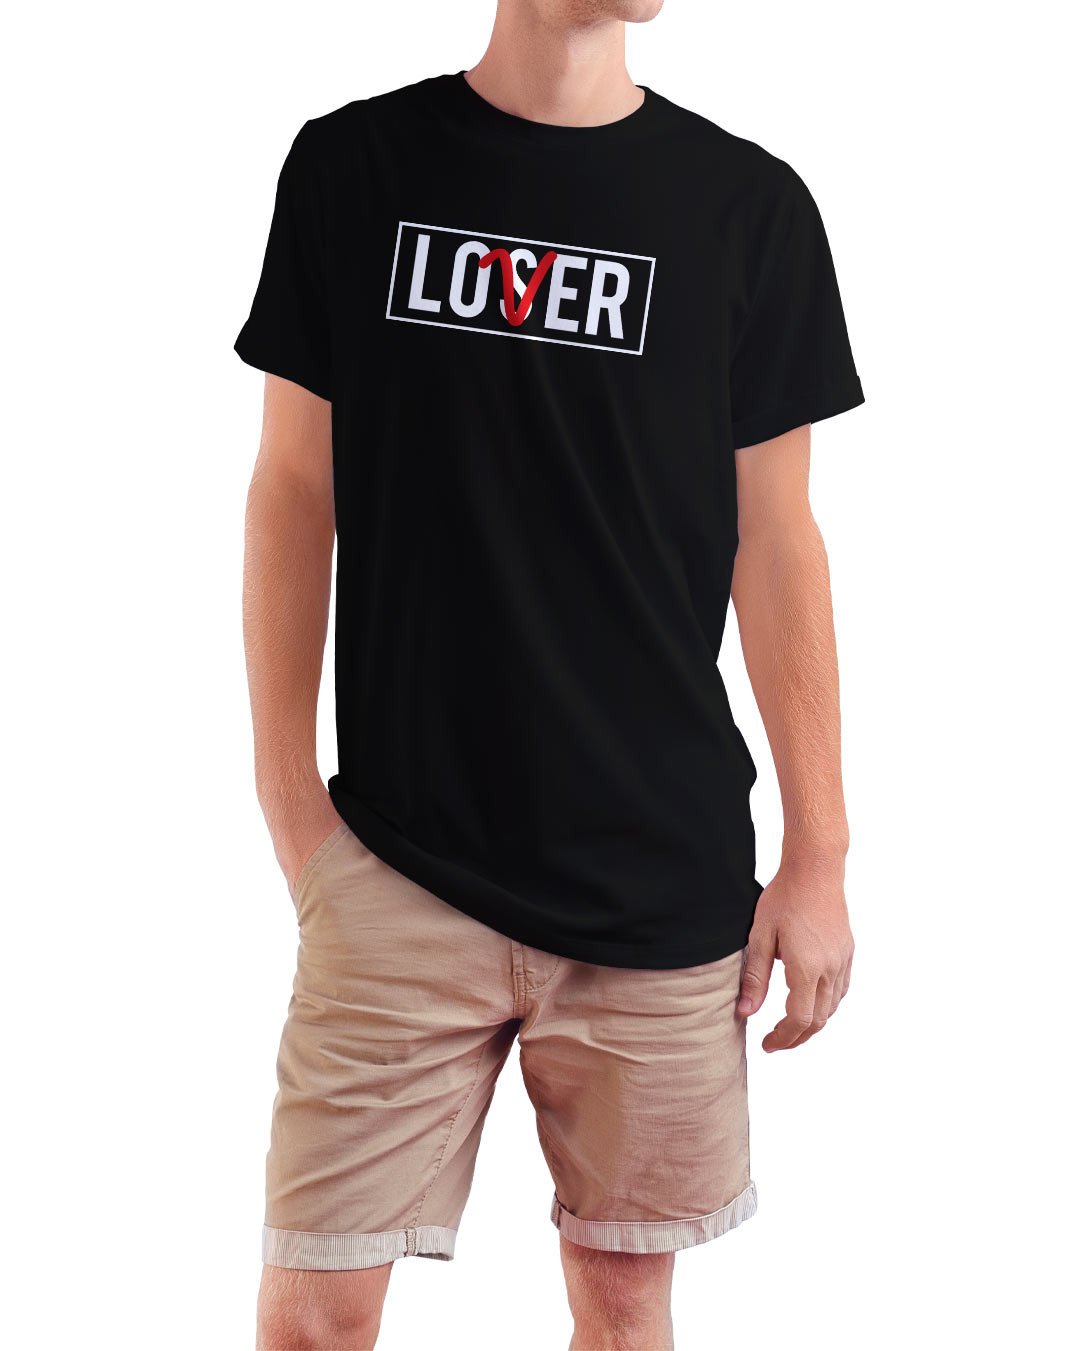 TeesWarrior Loser Graphic Printed 100% Cotton T-Shirt – Regular Fit, Round Neck, Half Sleeves